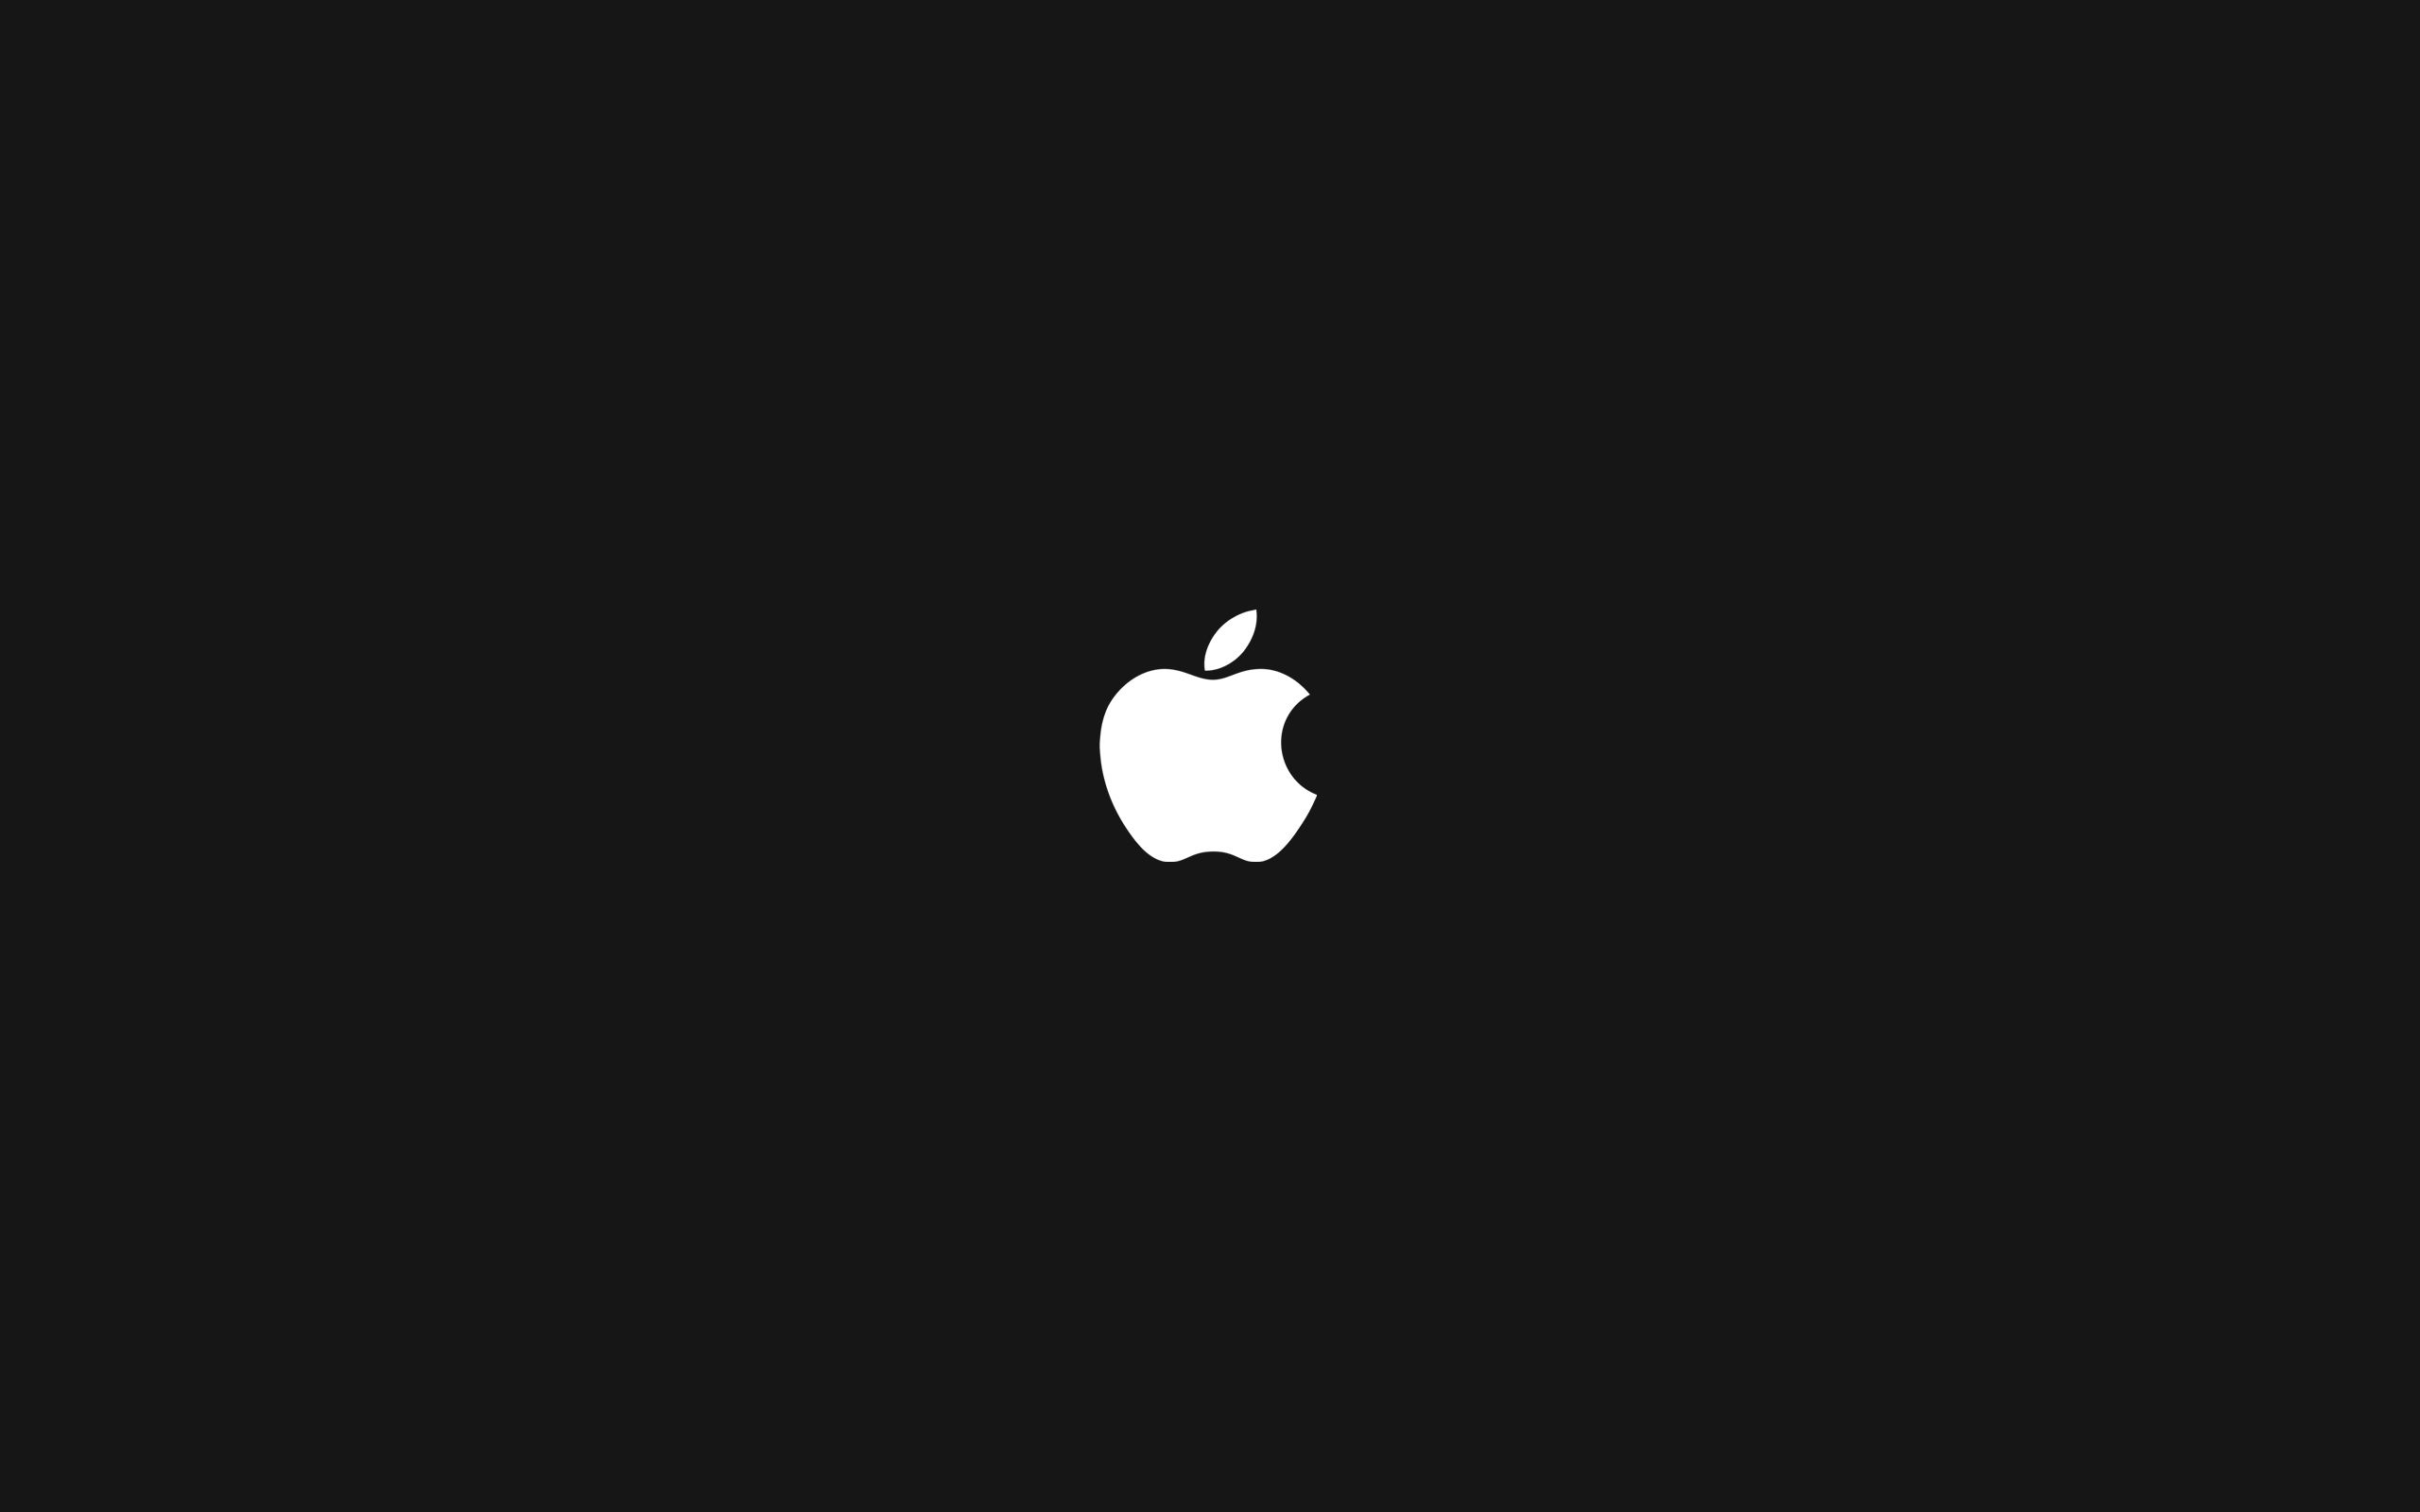 Schwarz Hintergrundbild 2560x1600. Apple Logo (schwarz) Hintergrundbilder. Apple Logo (schwarz) Frei Fotos